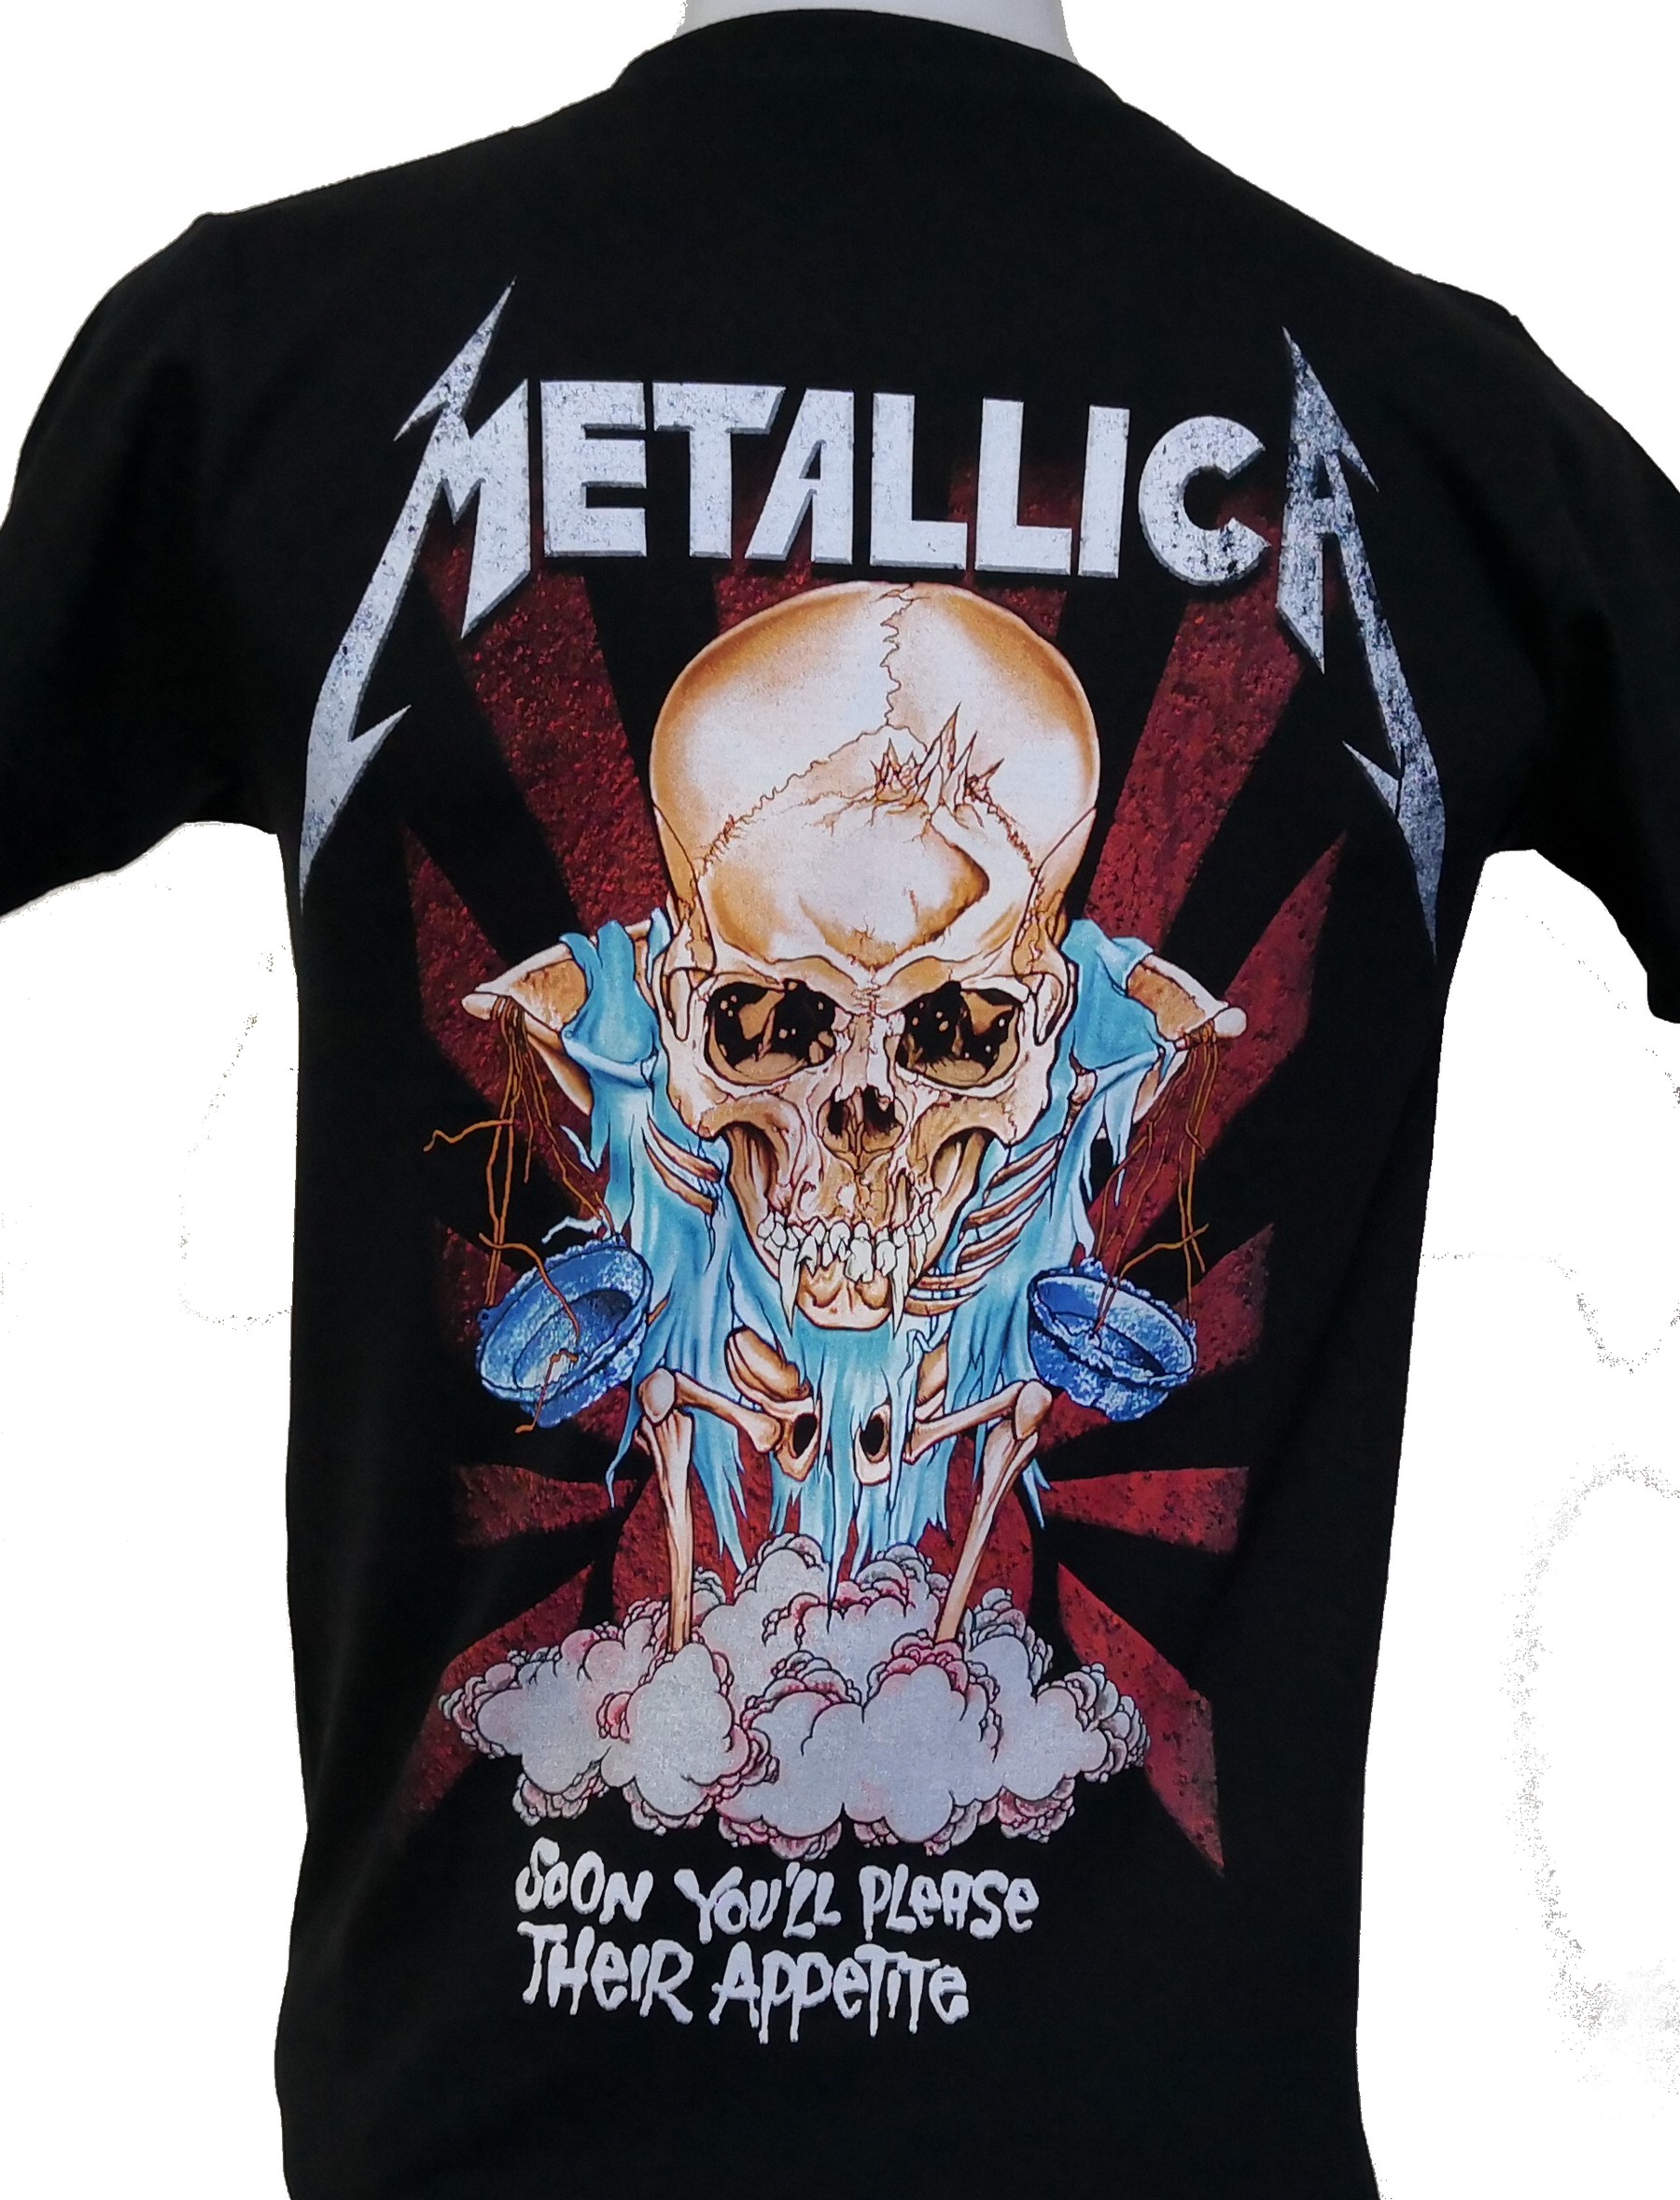 Metallica tshirt size XXL RoxxBKK